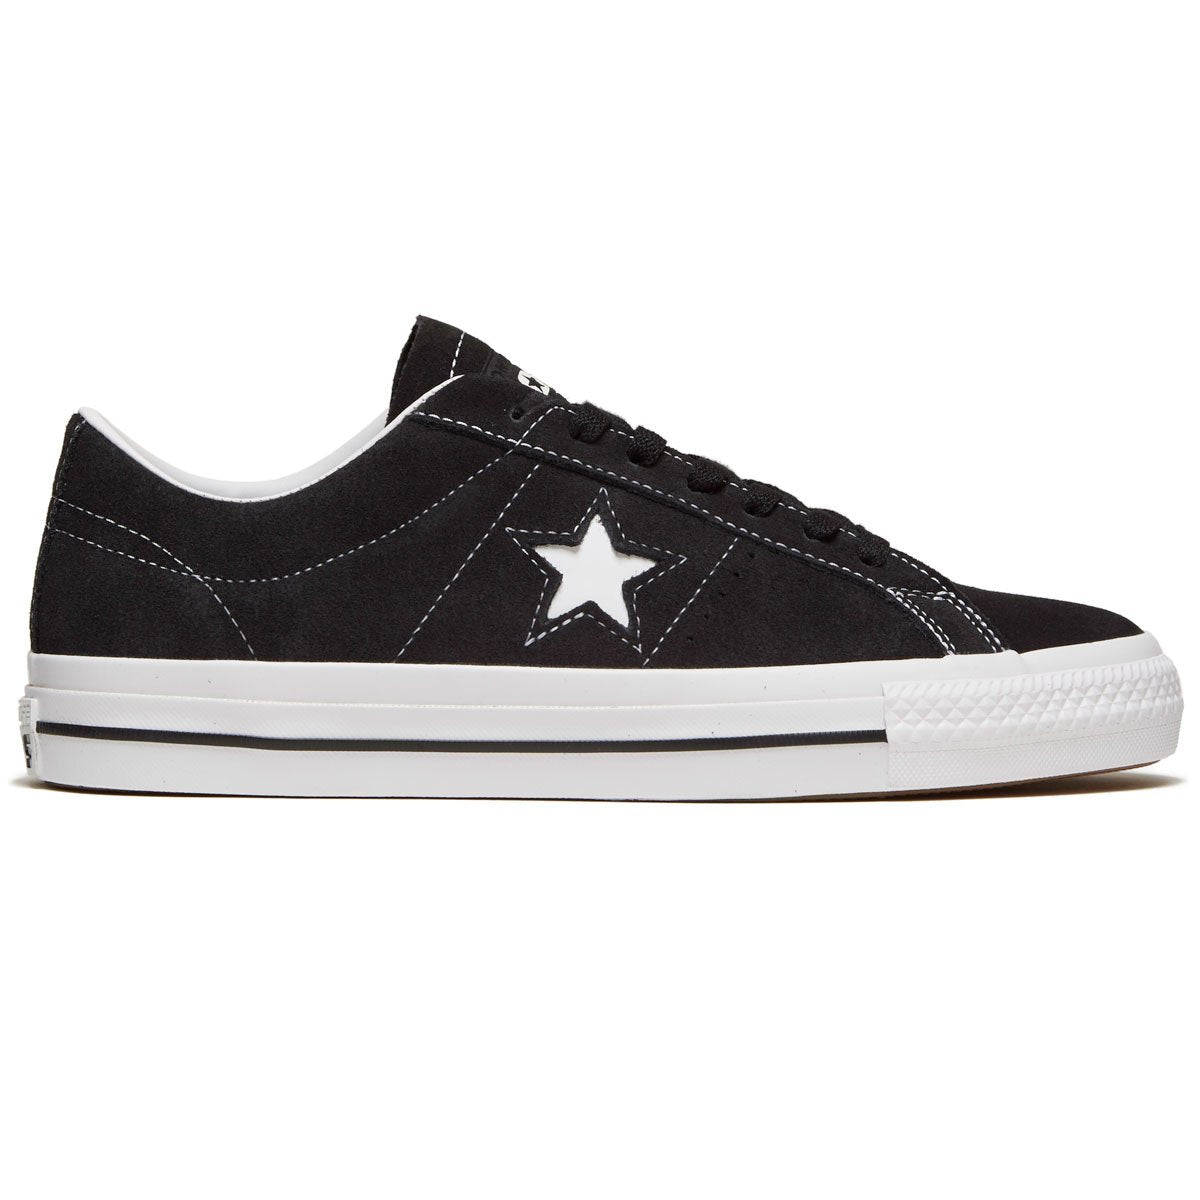 Converse One Star Pro Ox Shoes - Black/Black/White image 1